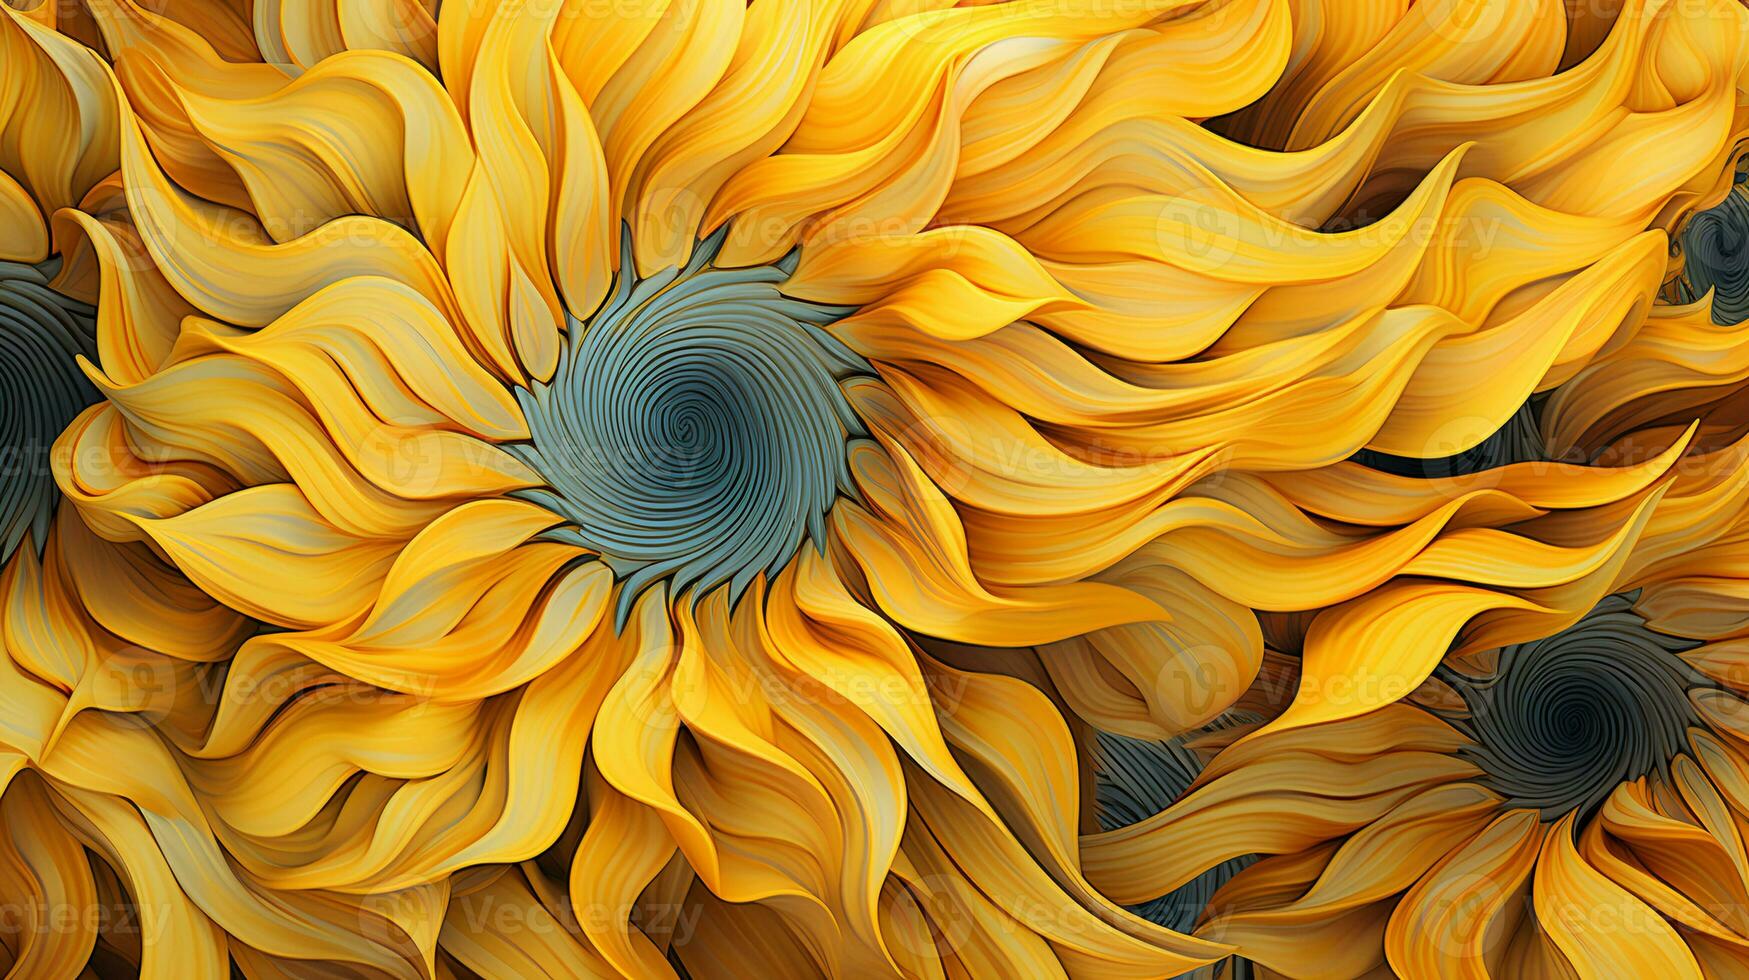 Photo sunflowers  background